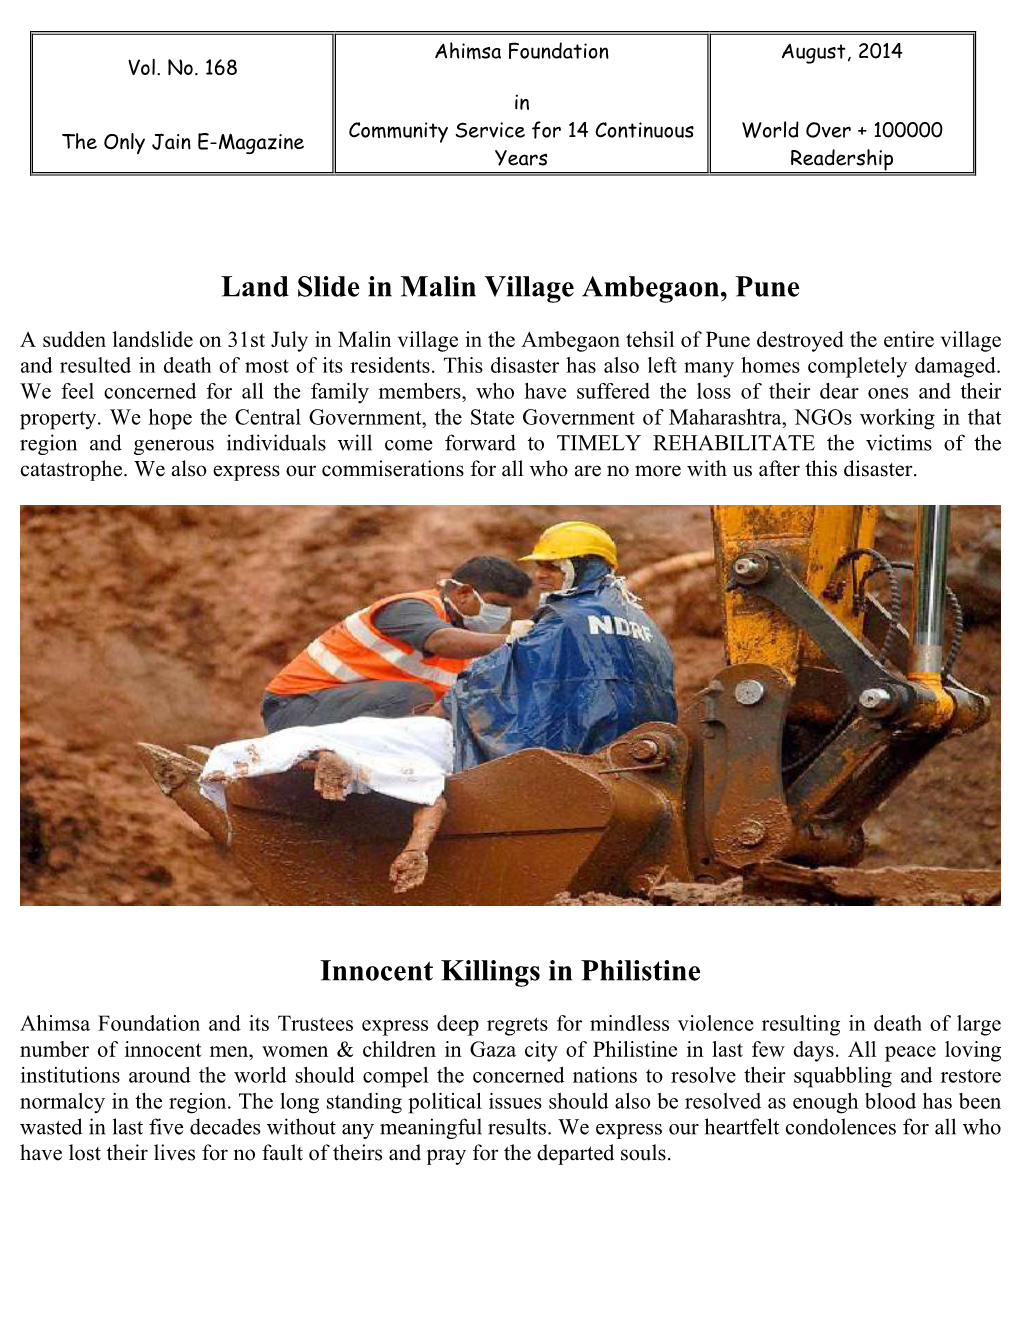 Land Slide in Malin Village Ambegaon, Pune Innocent Killings in Philistine